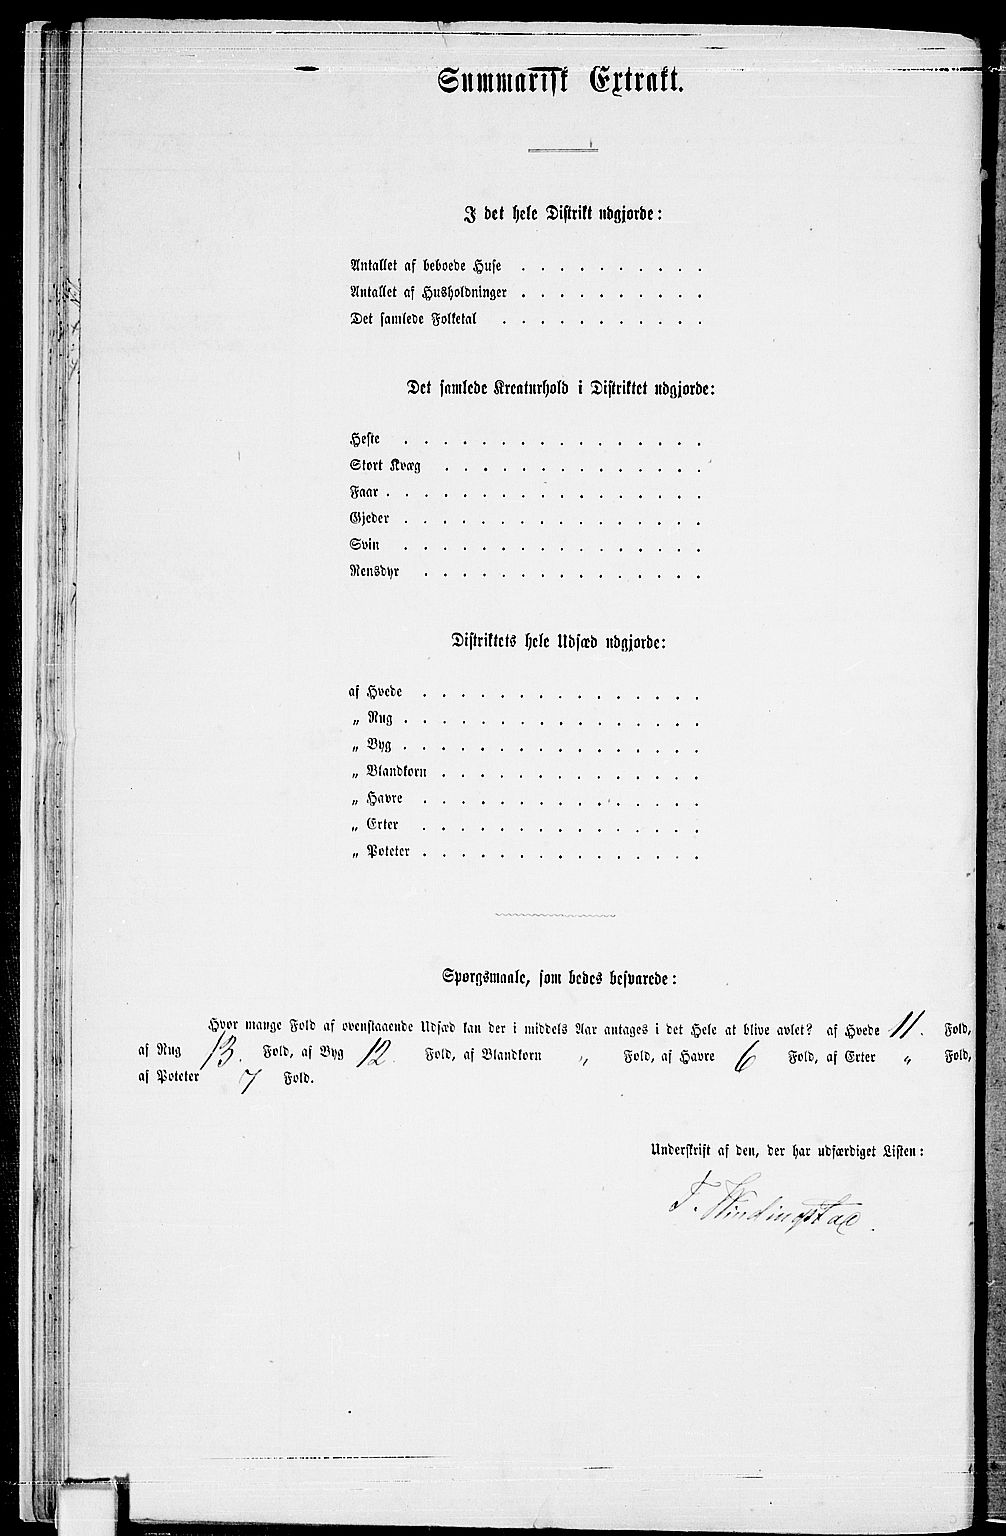 RA, Folketelling 1865 for 0724L Sandeherred prestegjeld, Sandeherred sokn, 1865, s. 21